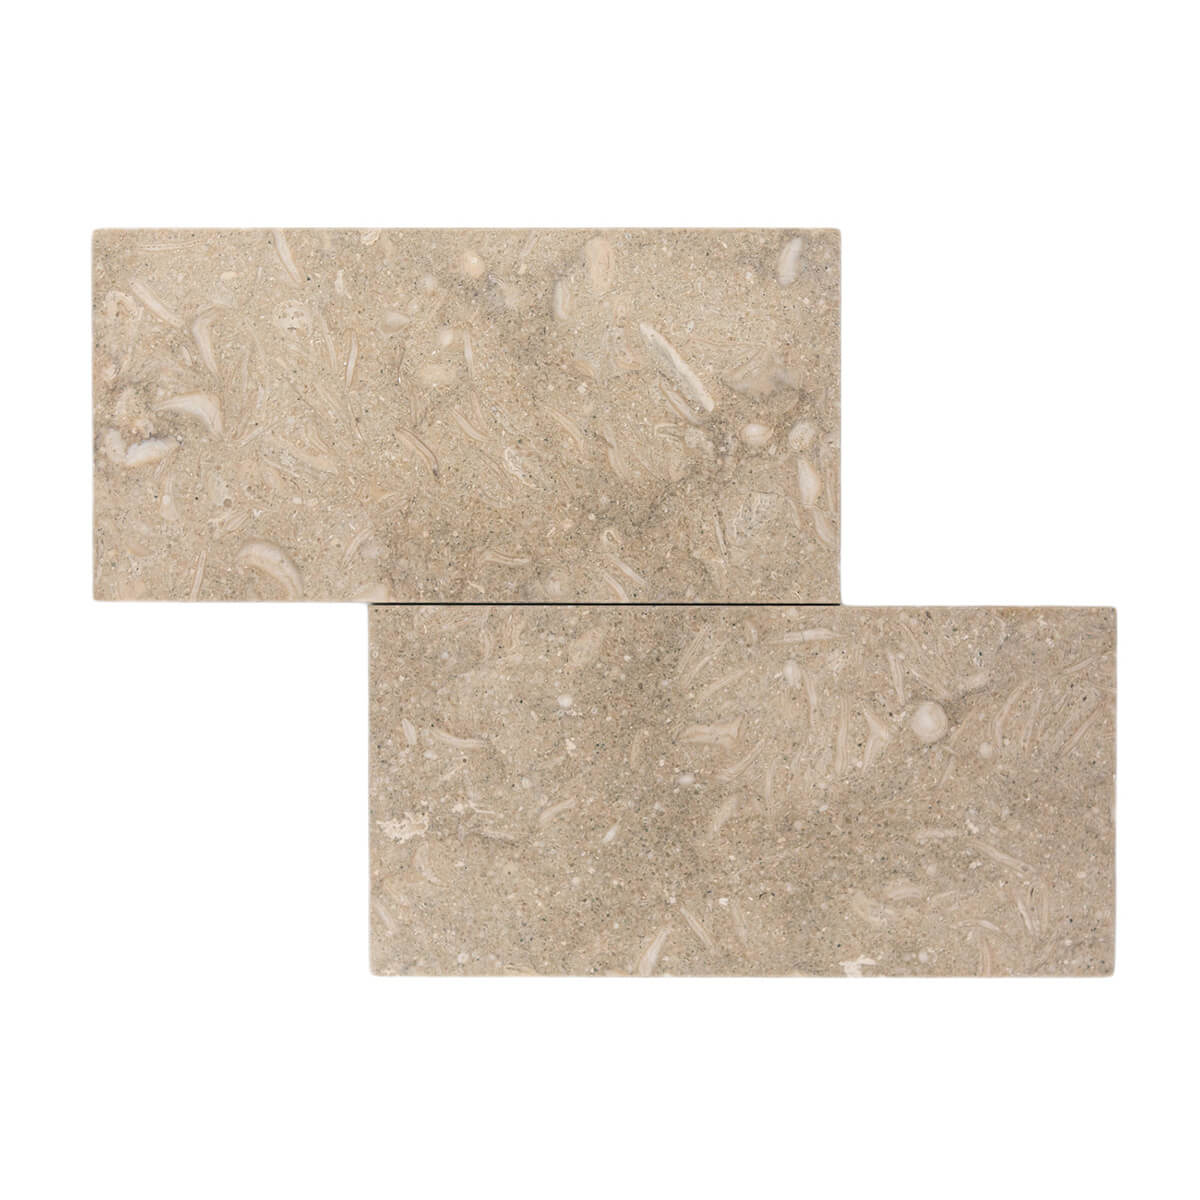 haussmann pistache seagrass limestone rectangle natural stone field tile 6x12 honed